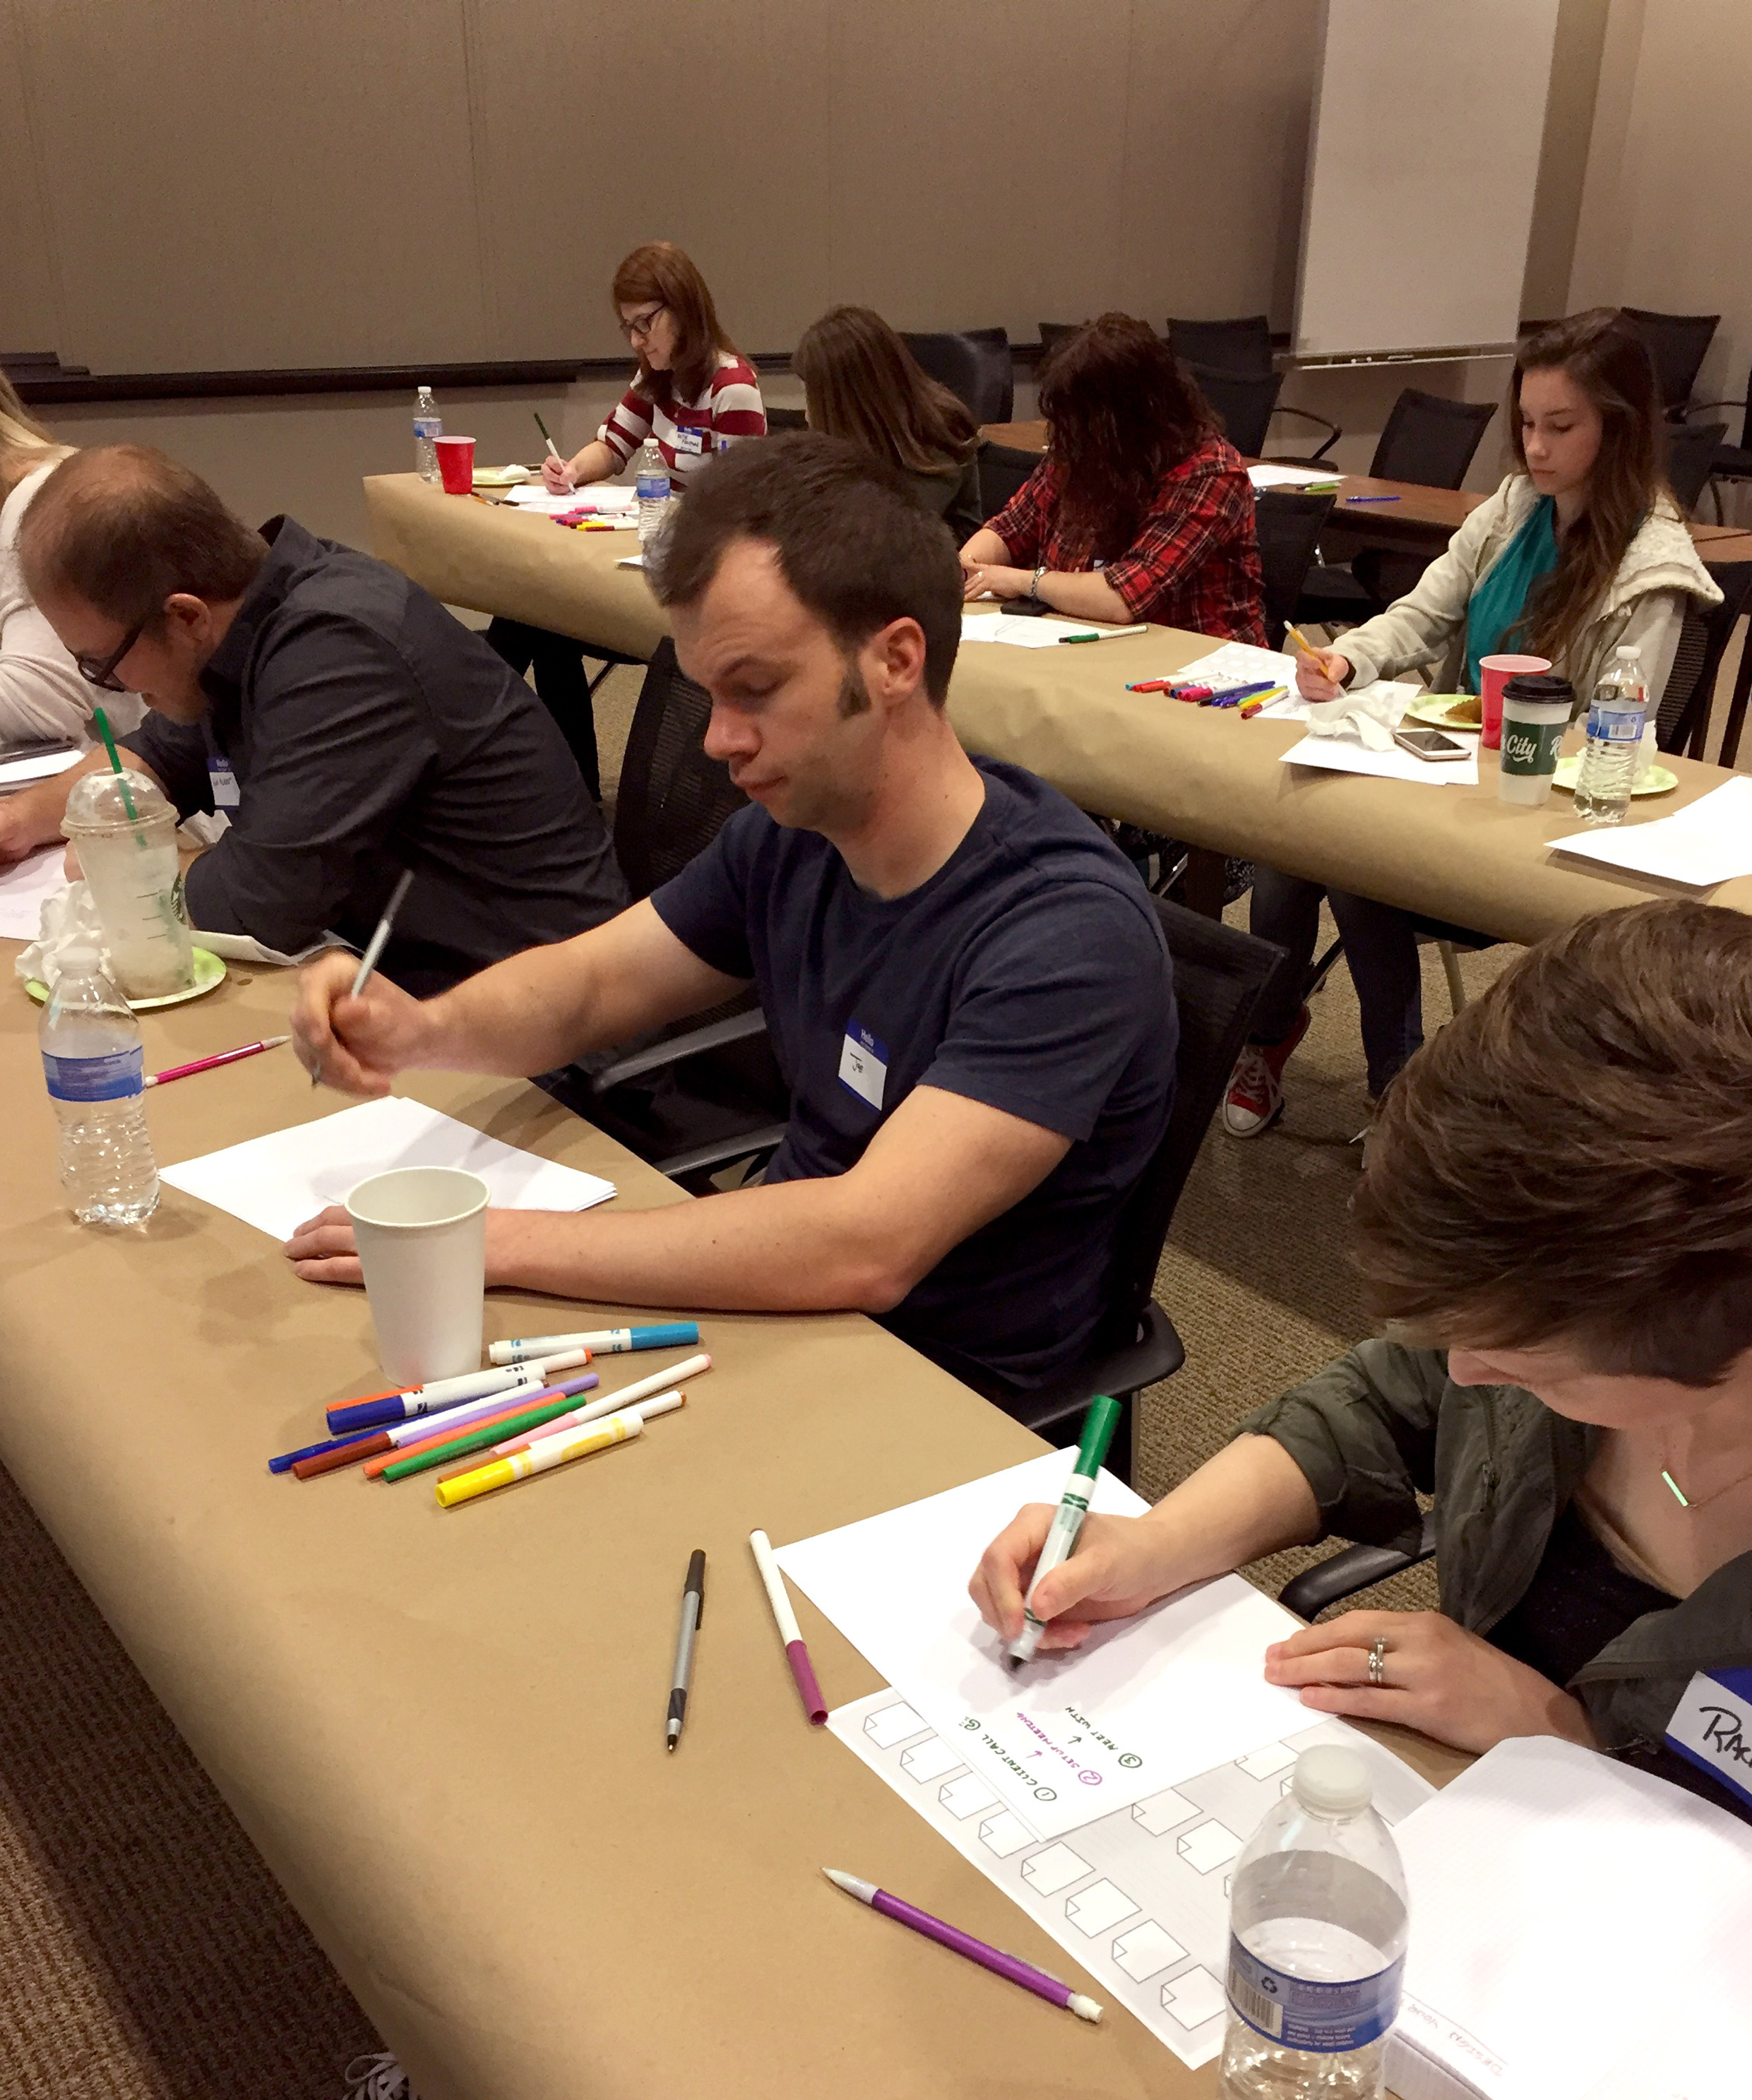 Workshop attendees craft their process & method